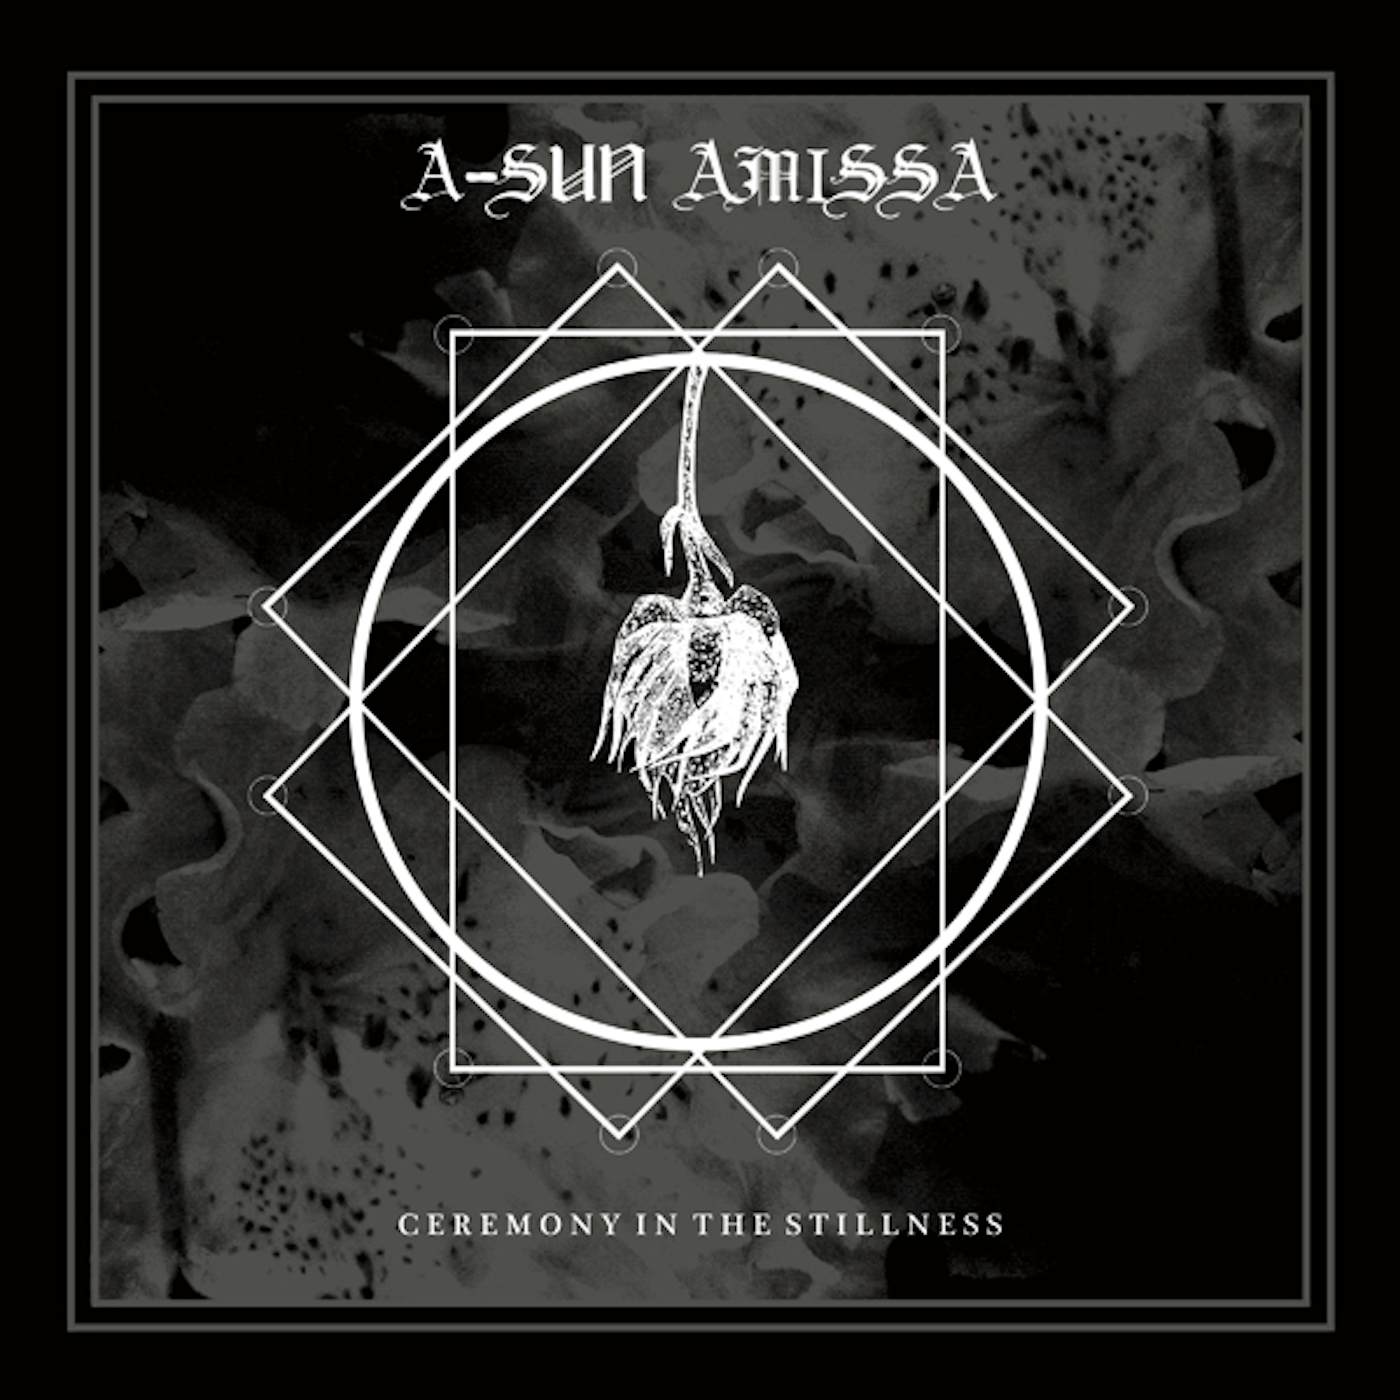 A-Sun Amissa Ceremony In The Stillness Vinyl Record